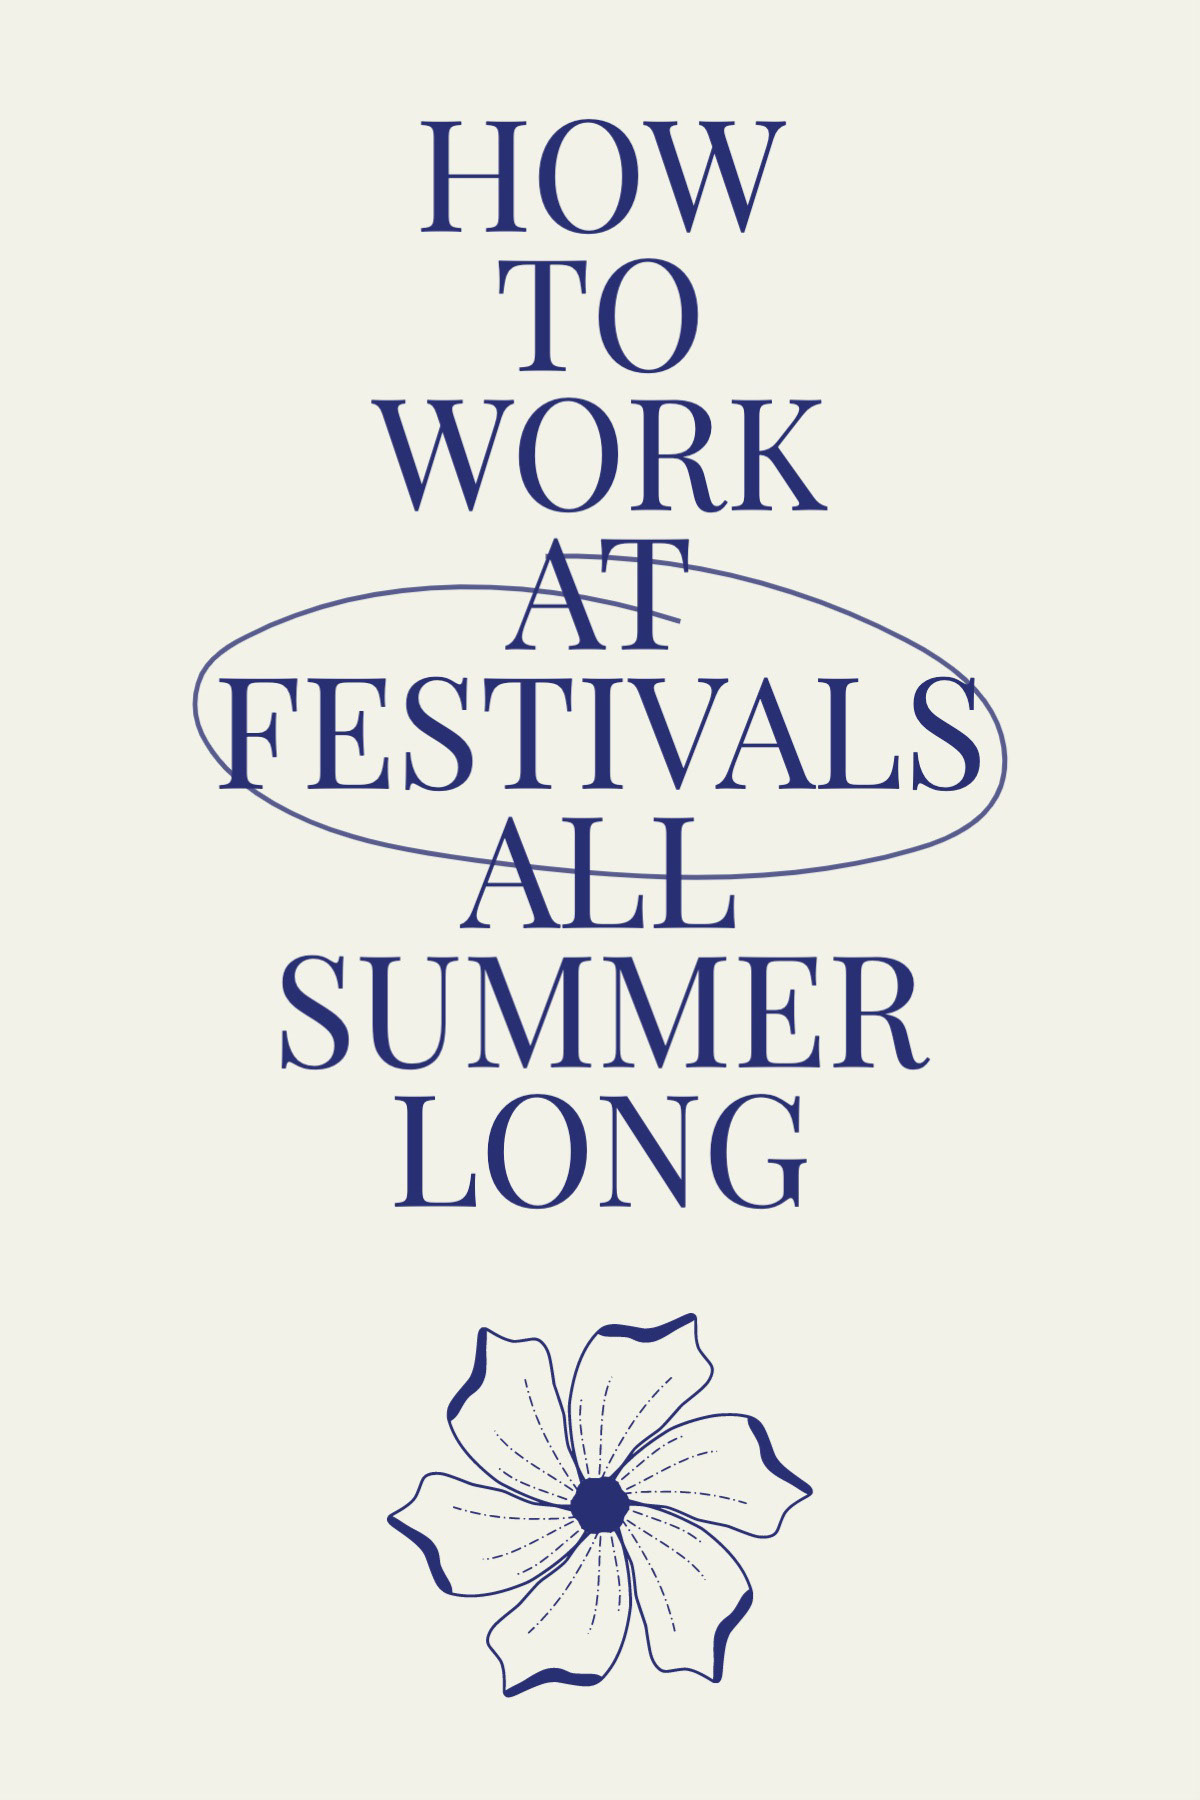 Blue & Grey Minimal Work at Festivals Pinterest Post HOW TO WORK AT FESTIVALS ALL SUMMER LONG